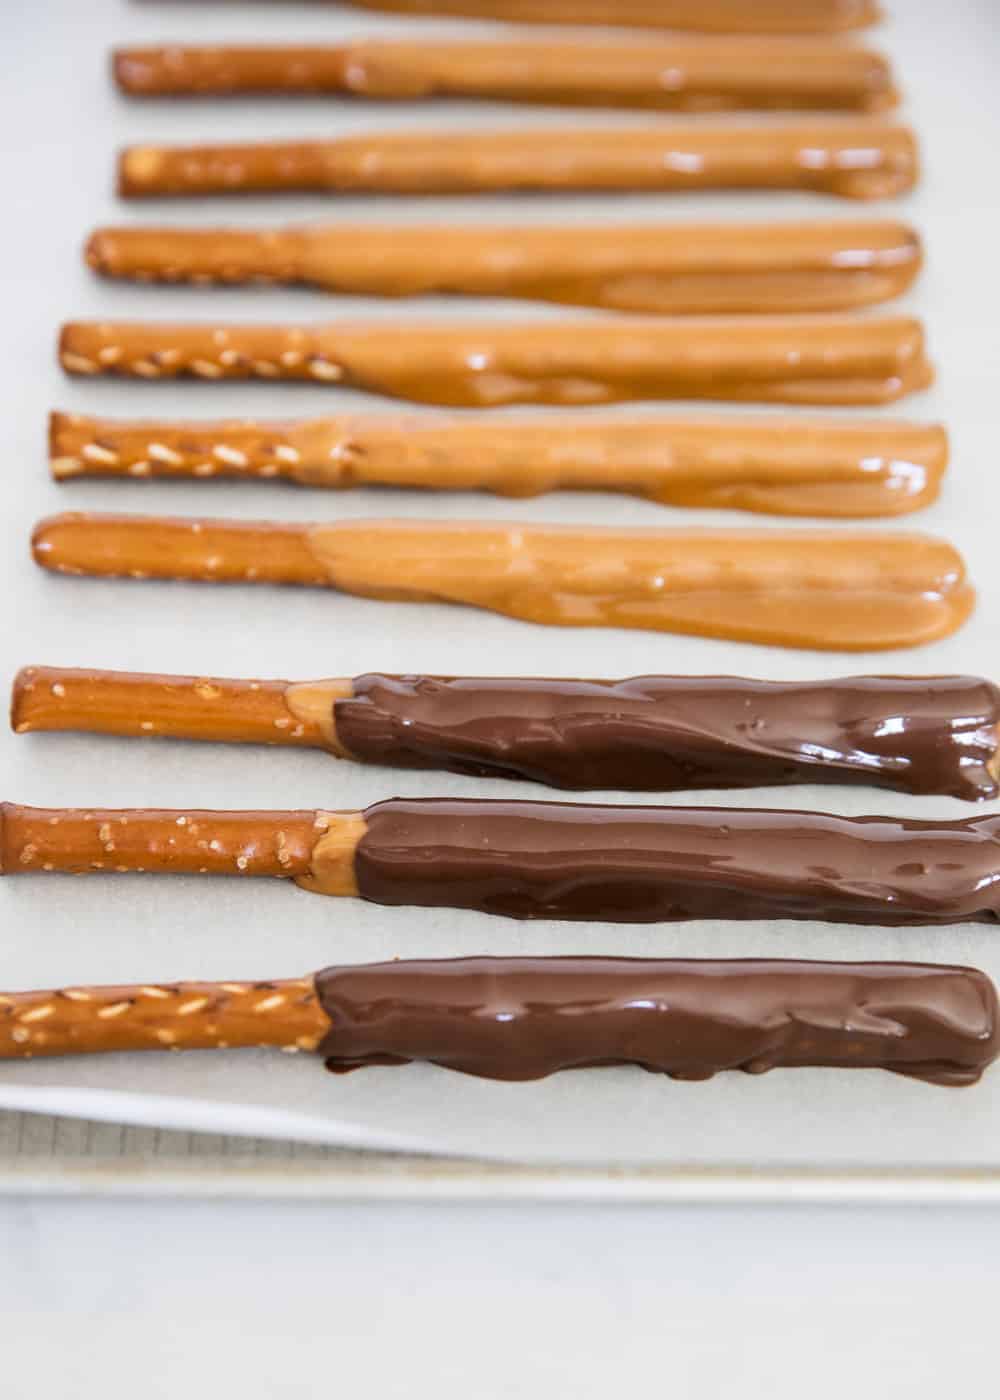 caramel and chocolate dipped pretzel rods